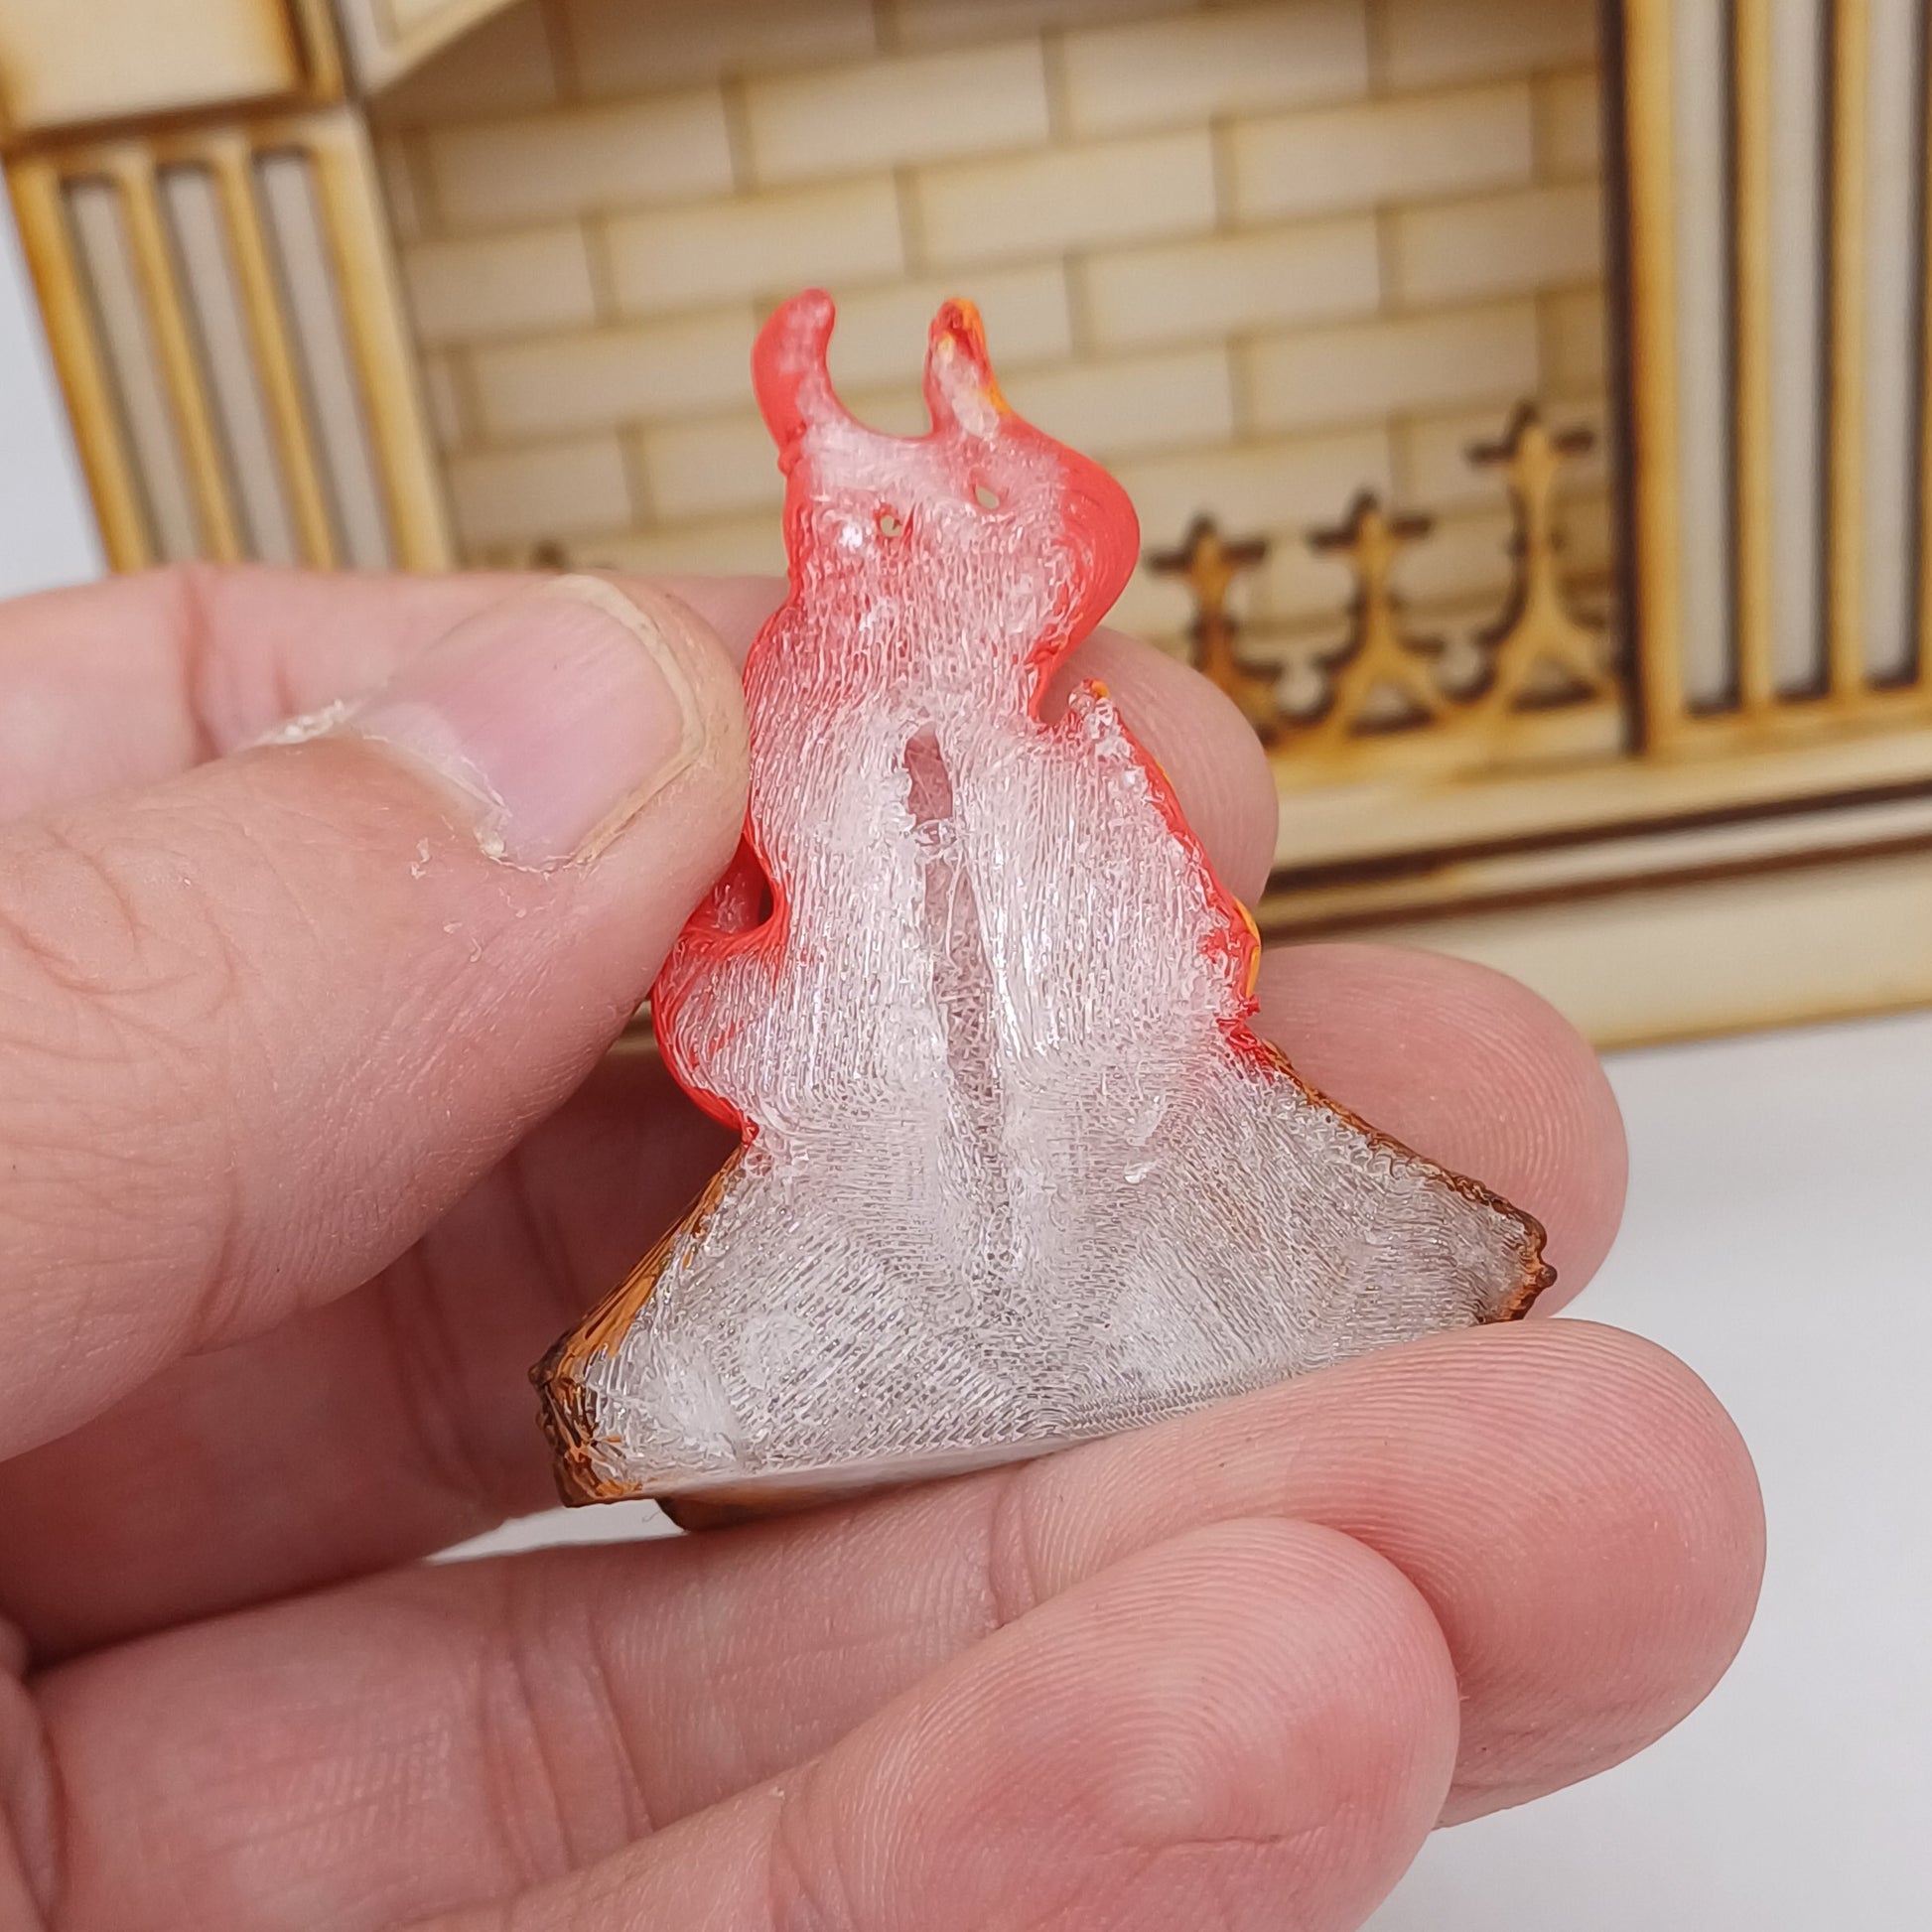 DIY Kamin mit Feuer im Maßstab 1:12 - Miniaturen